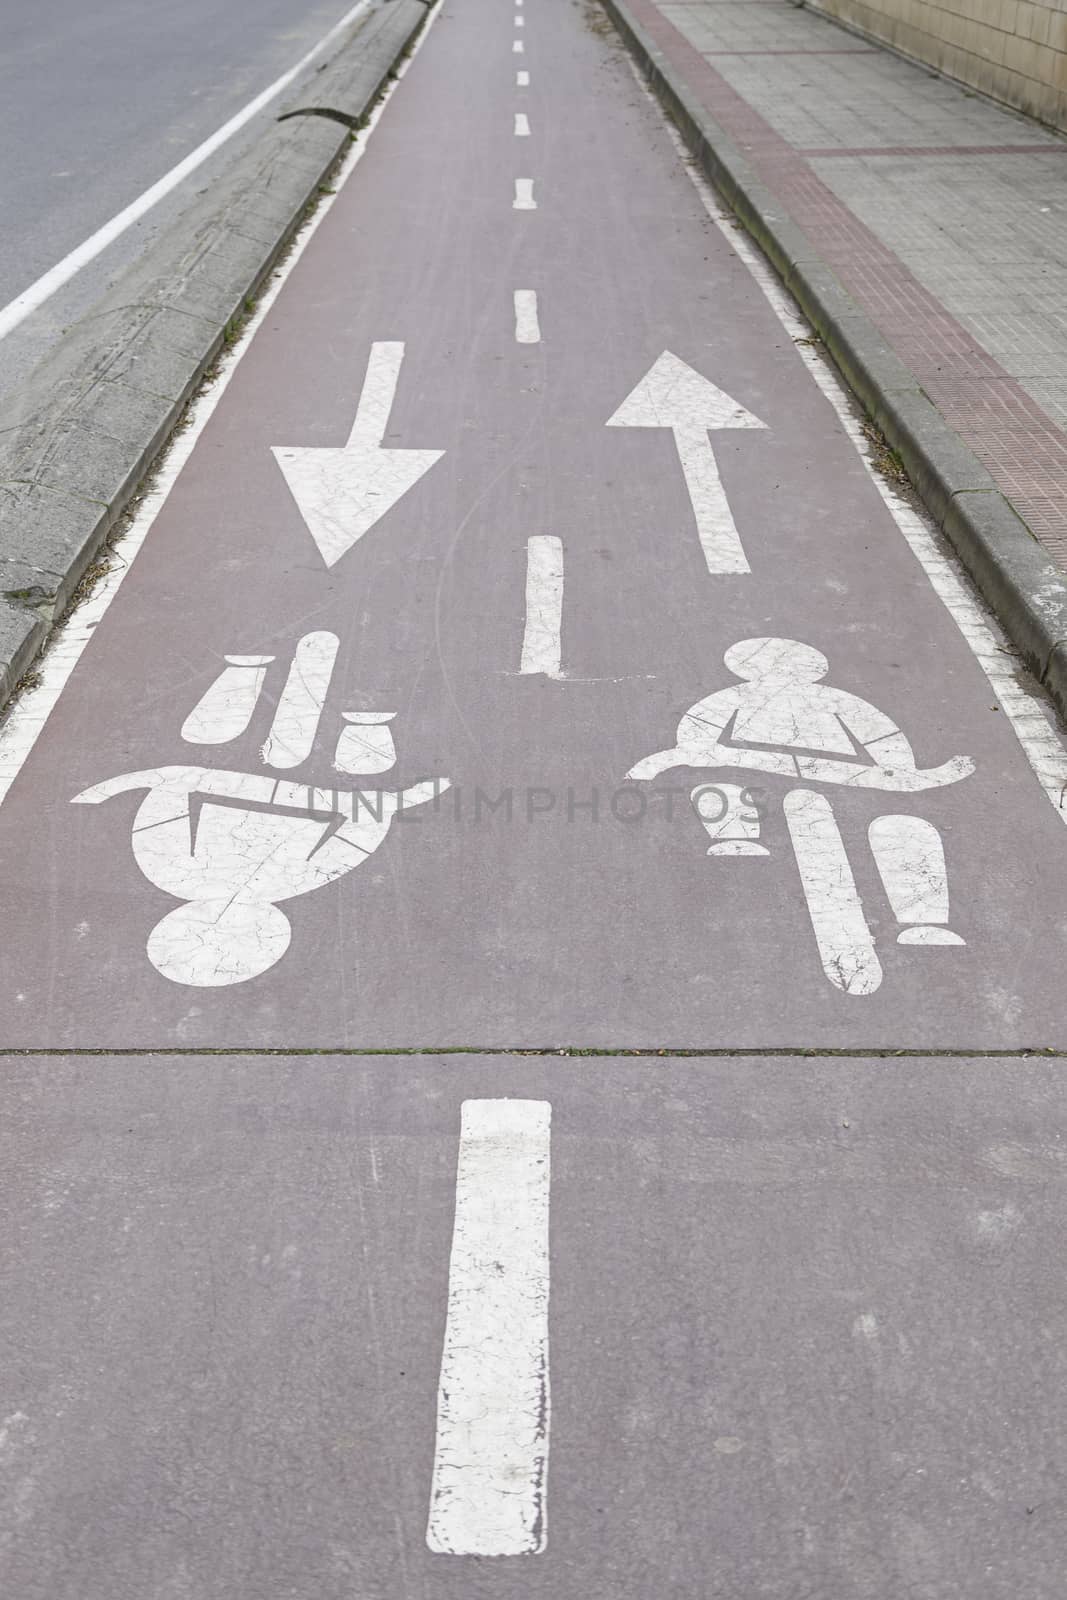 Signal bike on a bike path, a signal detail information on asphalt